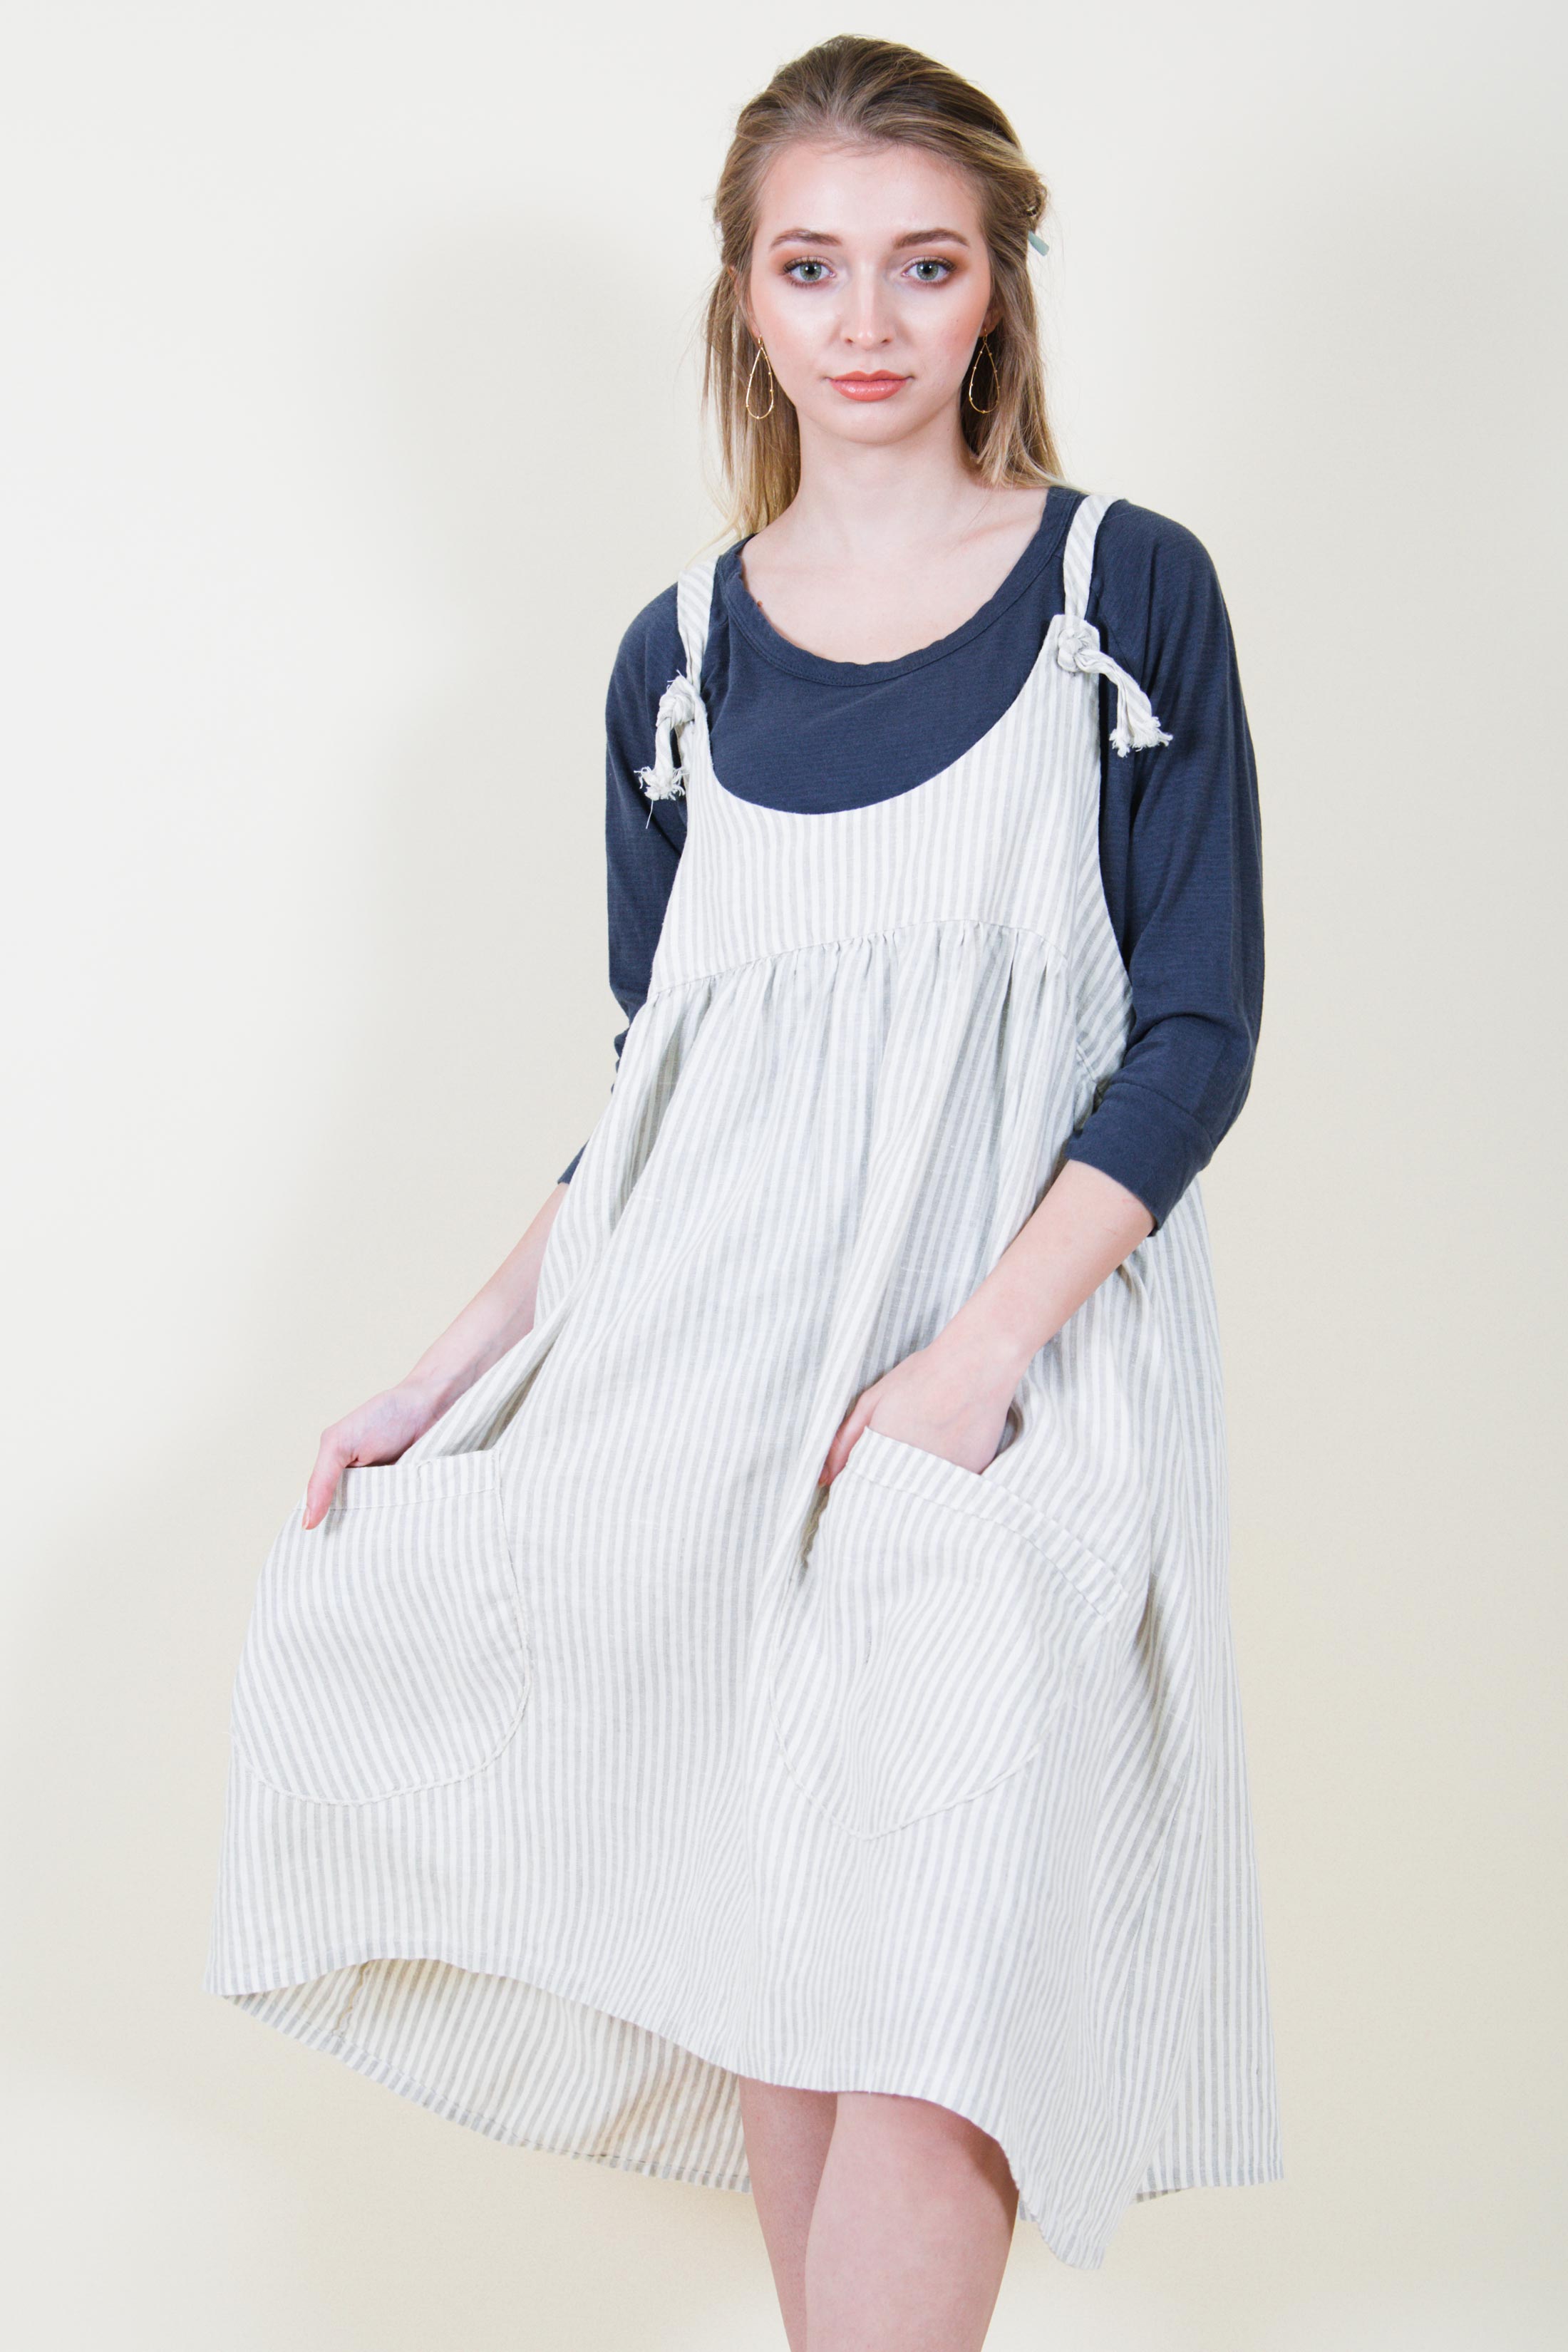 Women Cordoroy Dungaree Pinafore Dress Plus Size Square Neck Bib Overalls  Kaftan | eBay